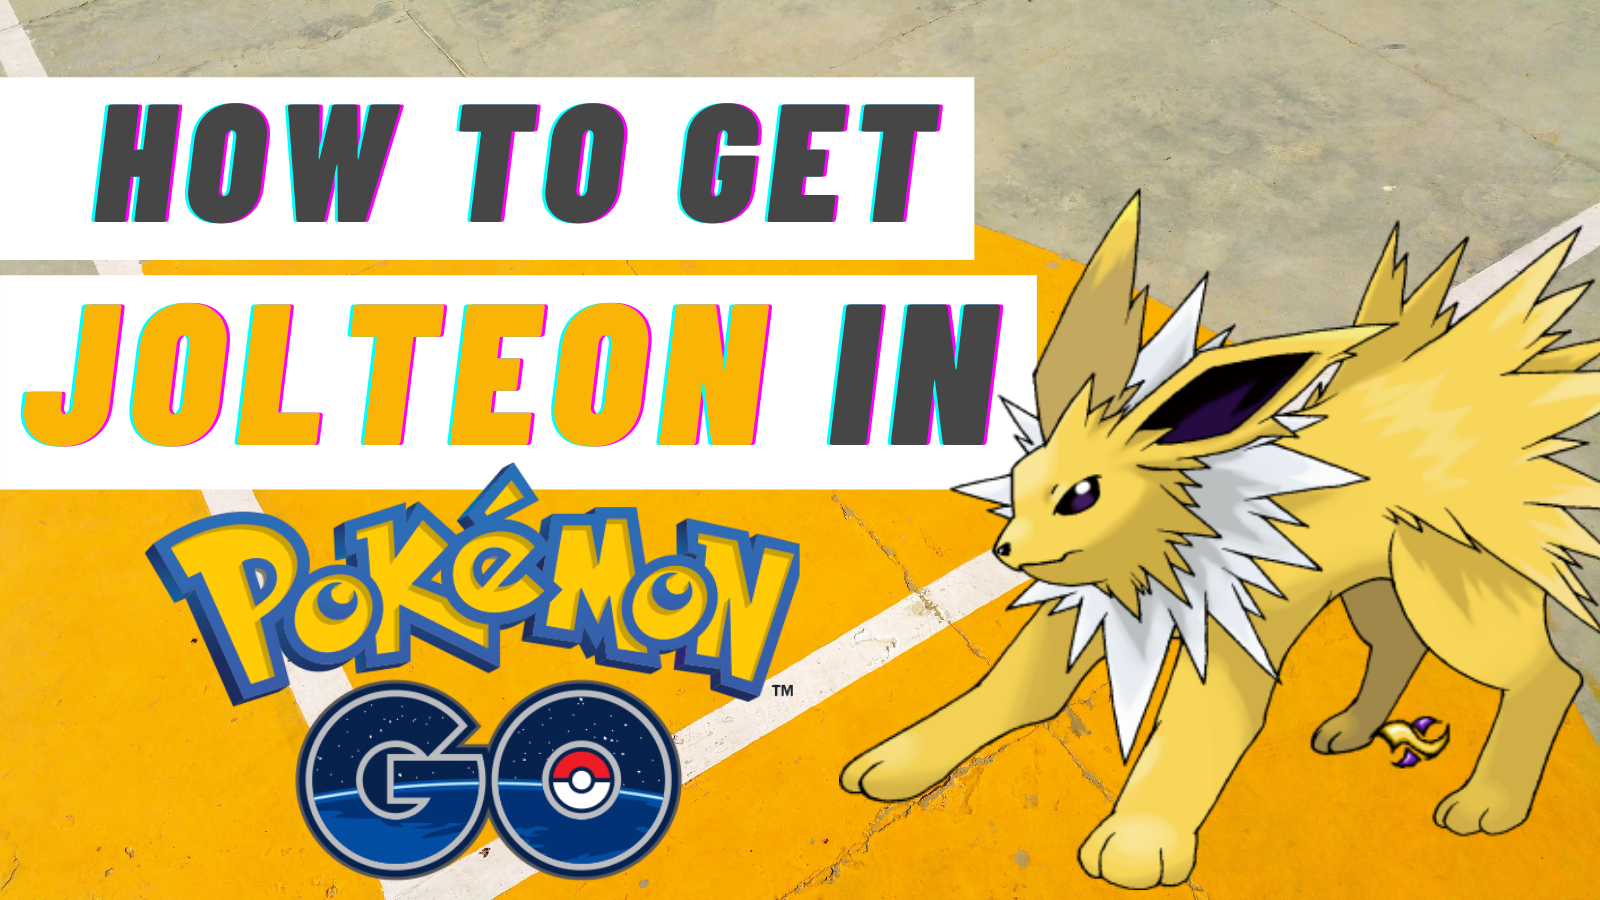 Pokemon Go Eevee Evolution: How to get Vaporeon, Flareon, Jolteon